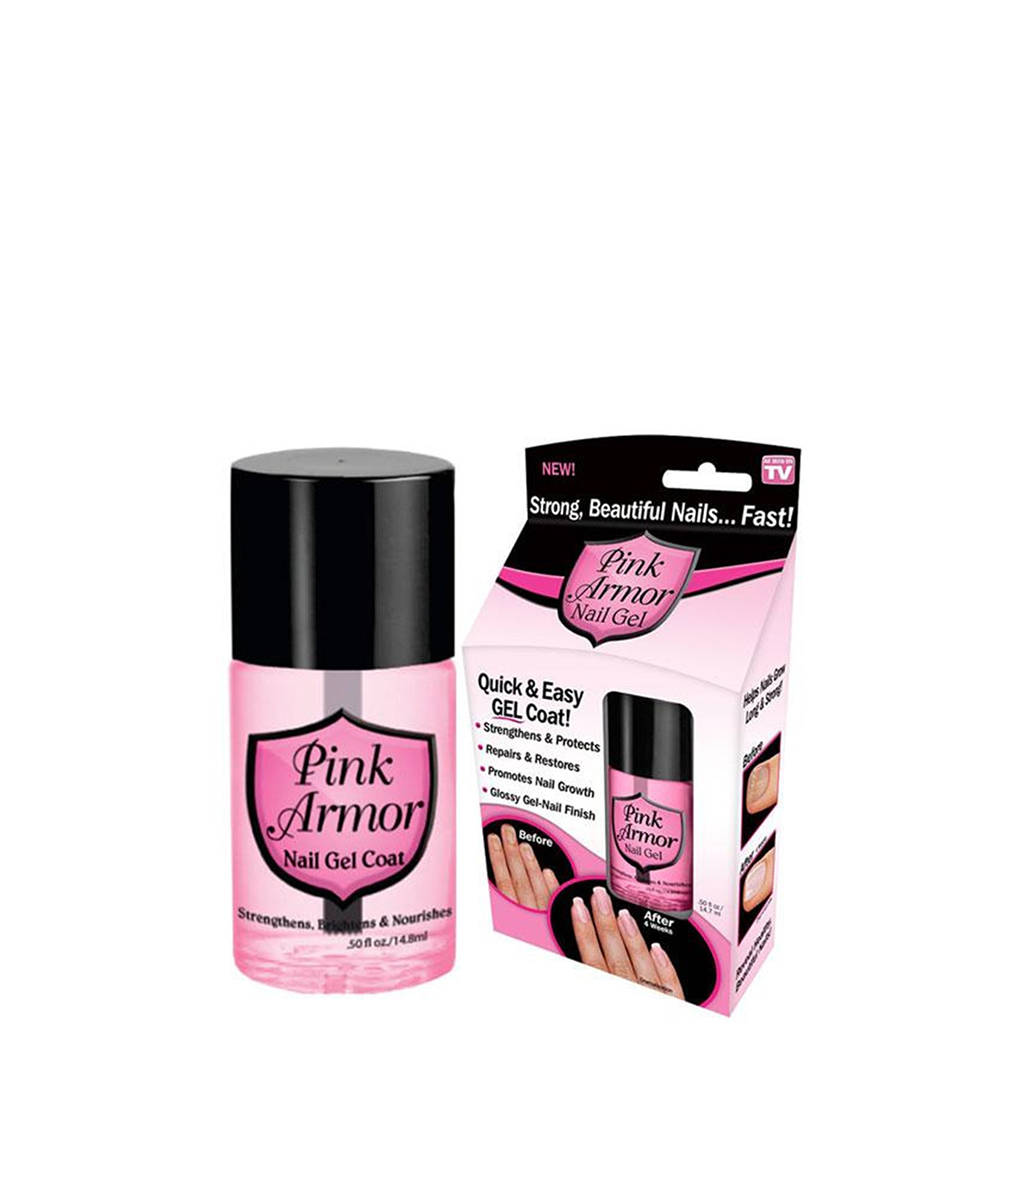 Pink Armour Nail Gel Coat | Shop Today. Get it Tomorrow! | takealot.com